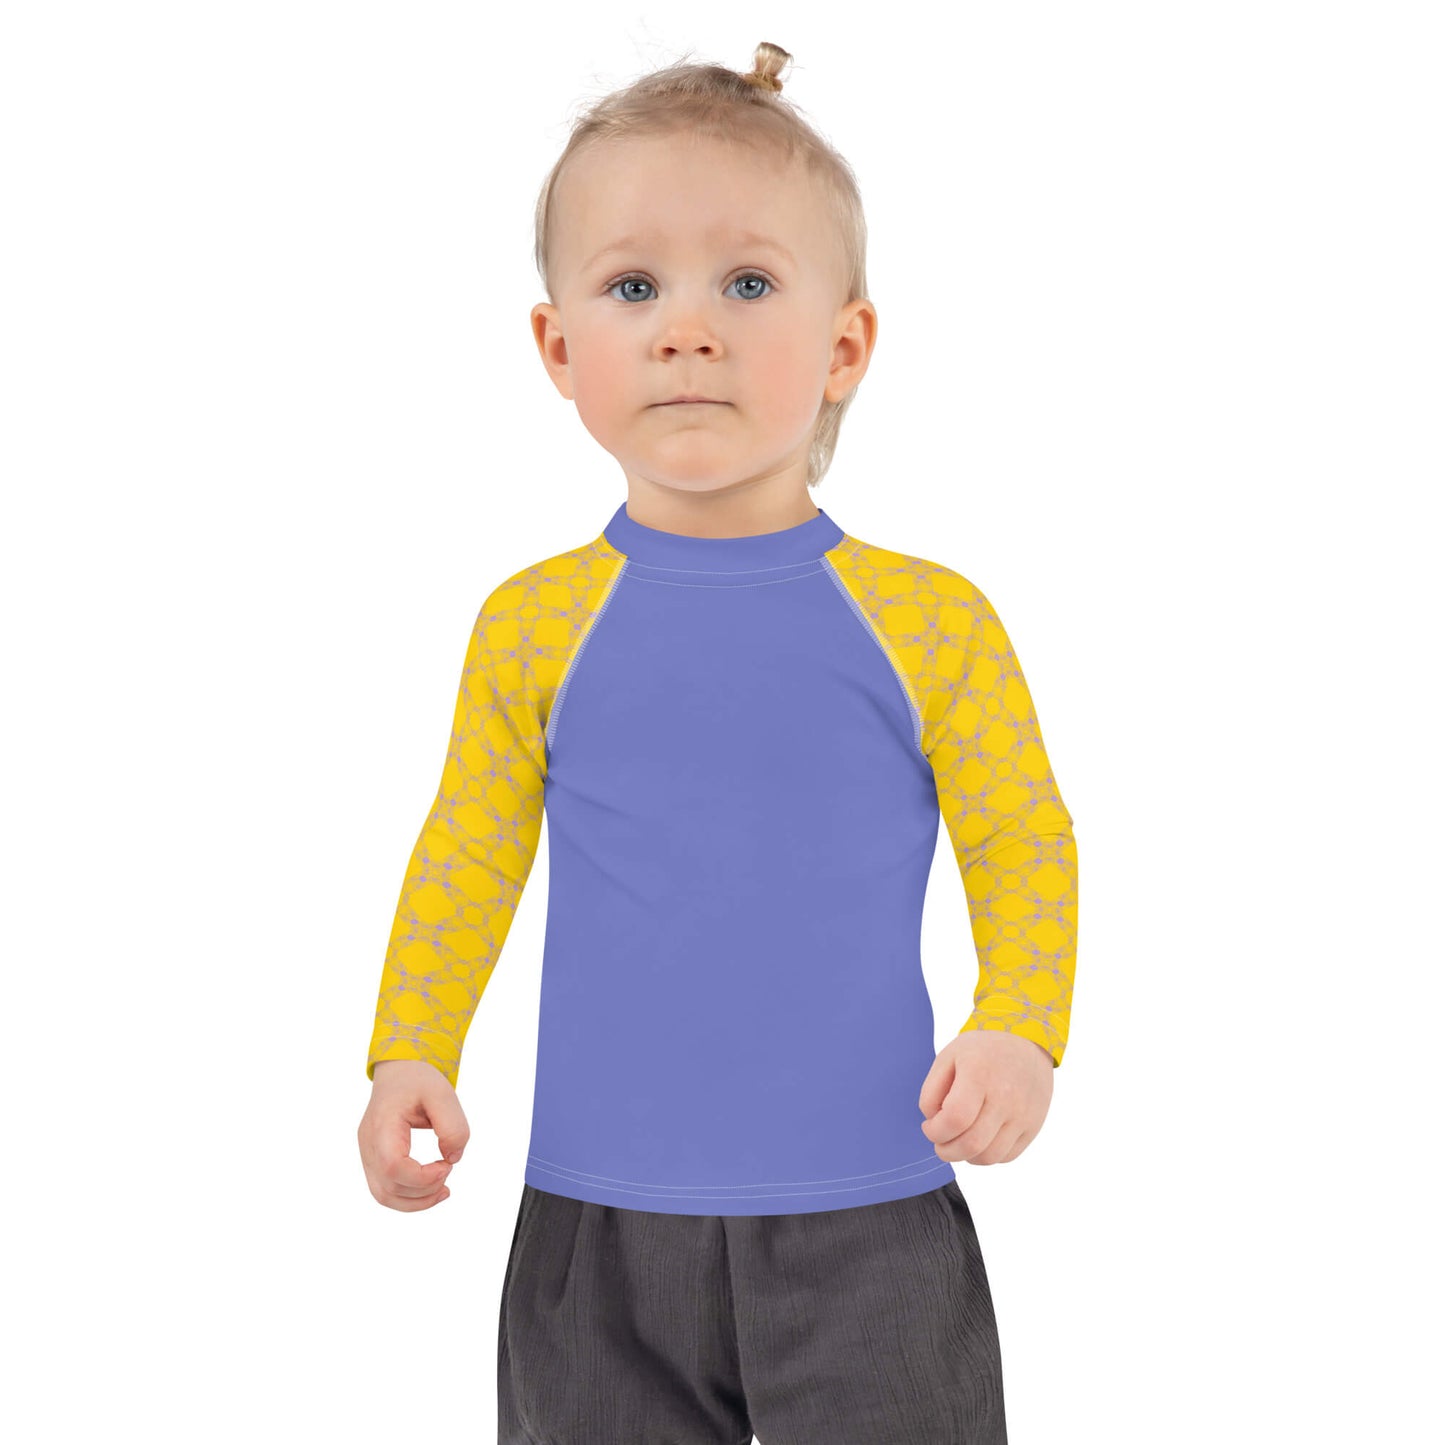 Toddler Boys Rash Guard with Yellow Sleeve & Slate Blue Body